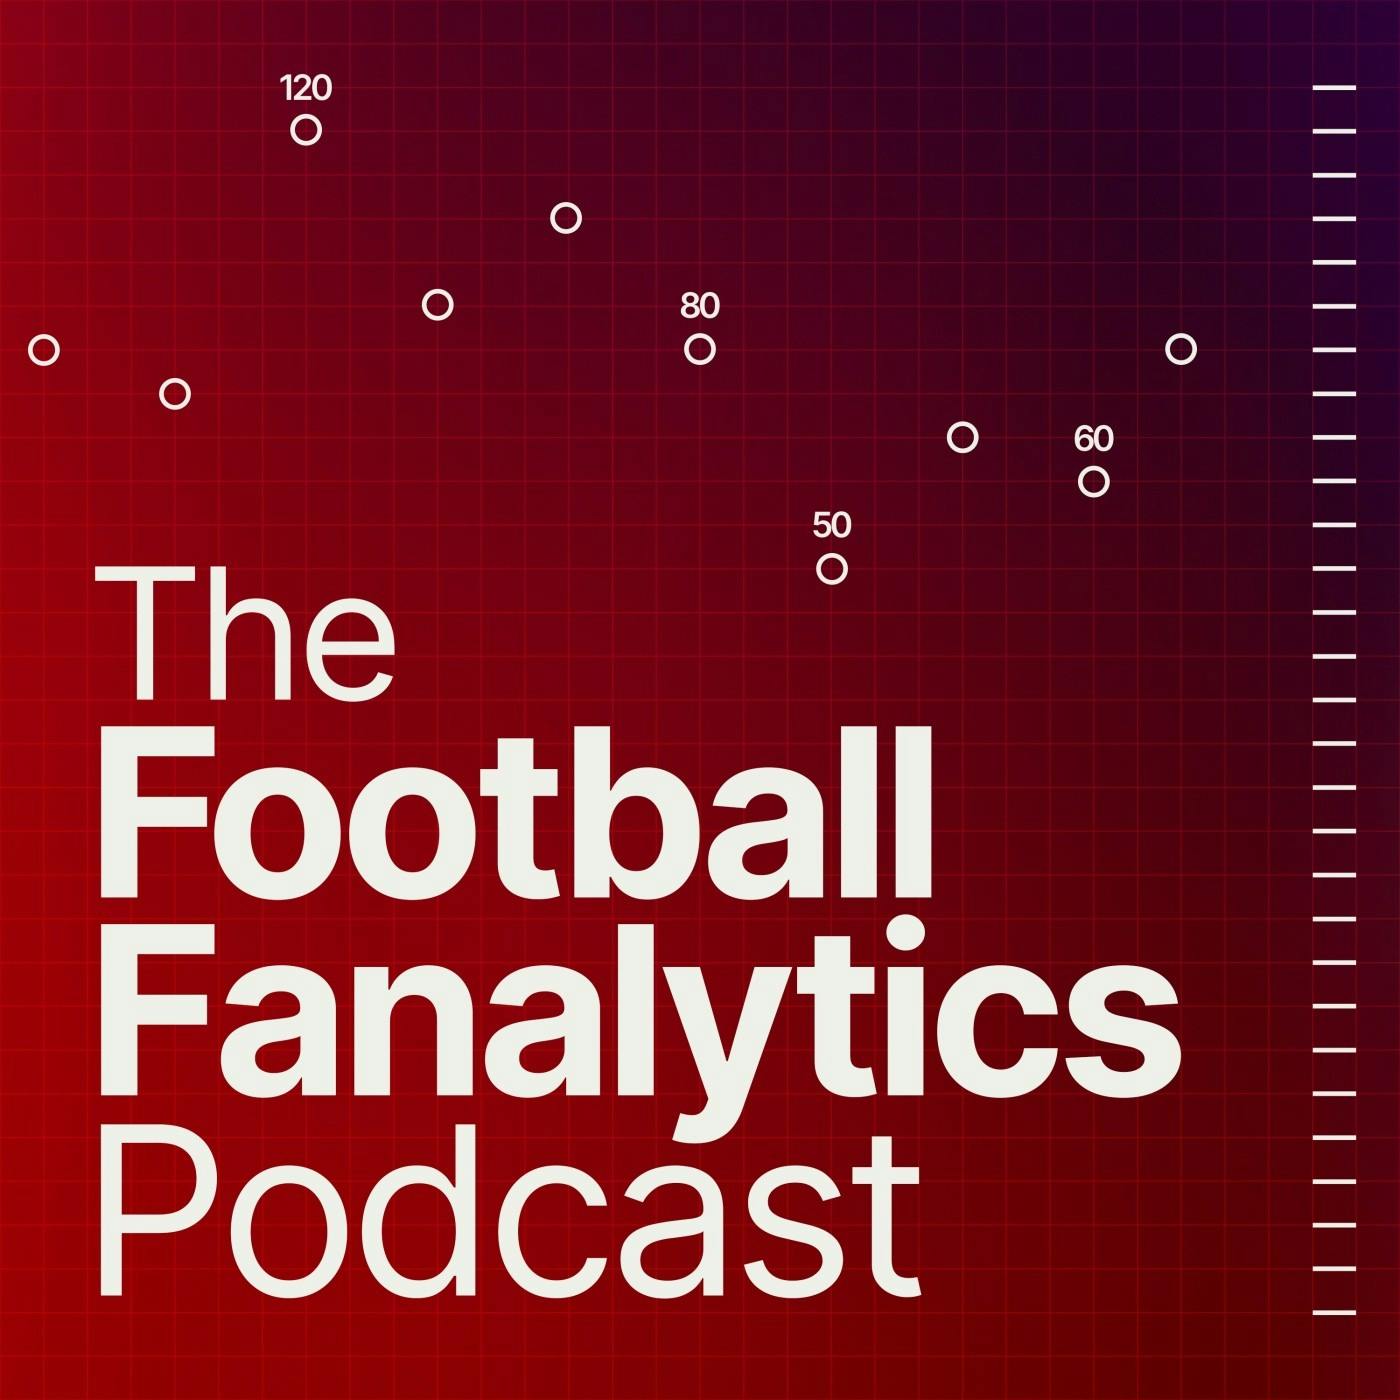 The Football Fanalytics Podcast podcast show image